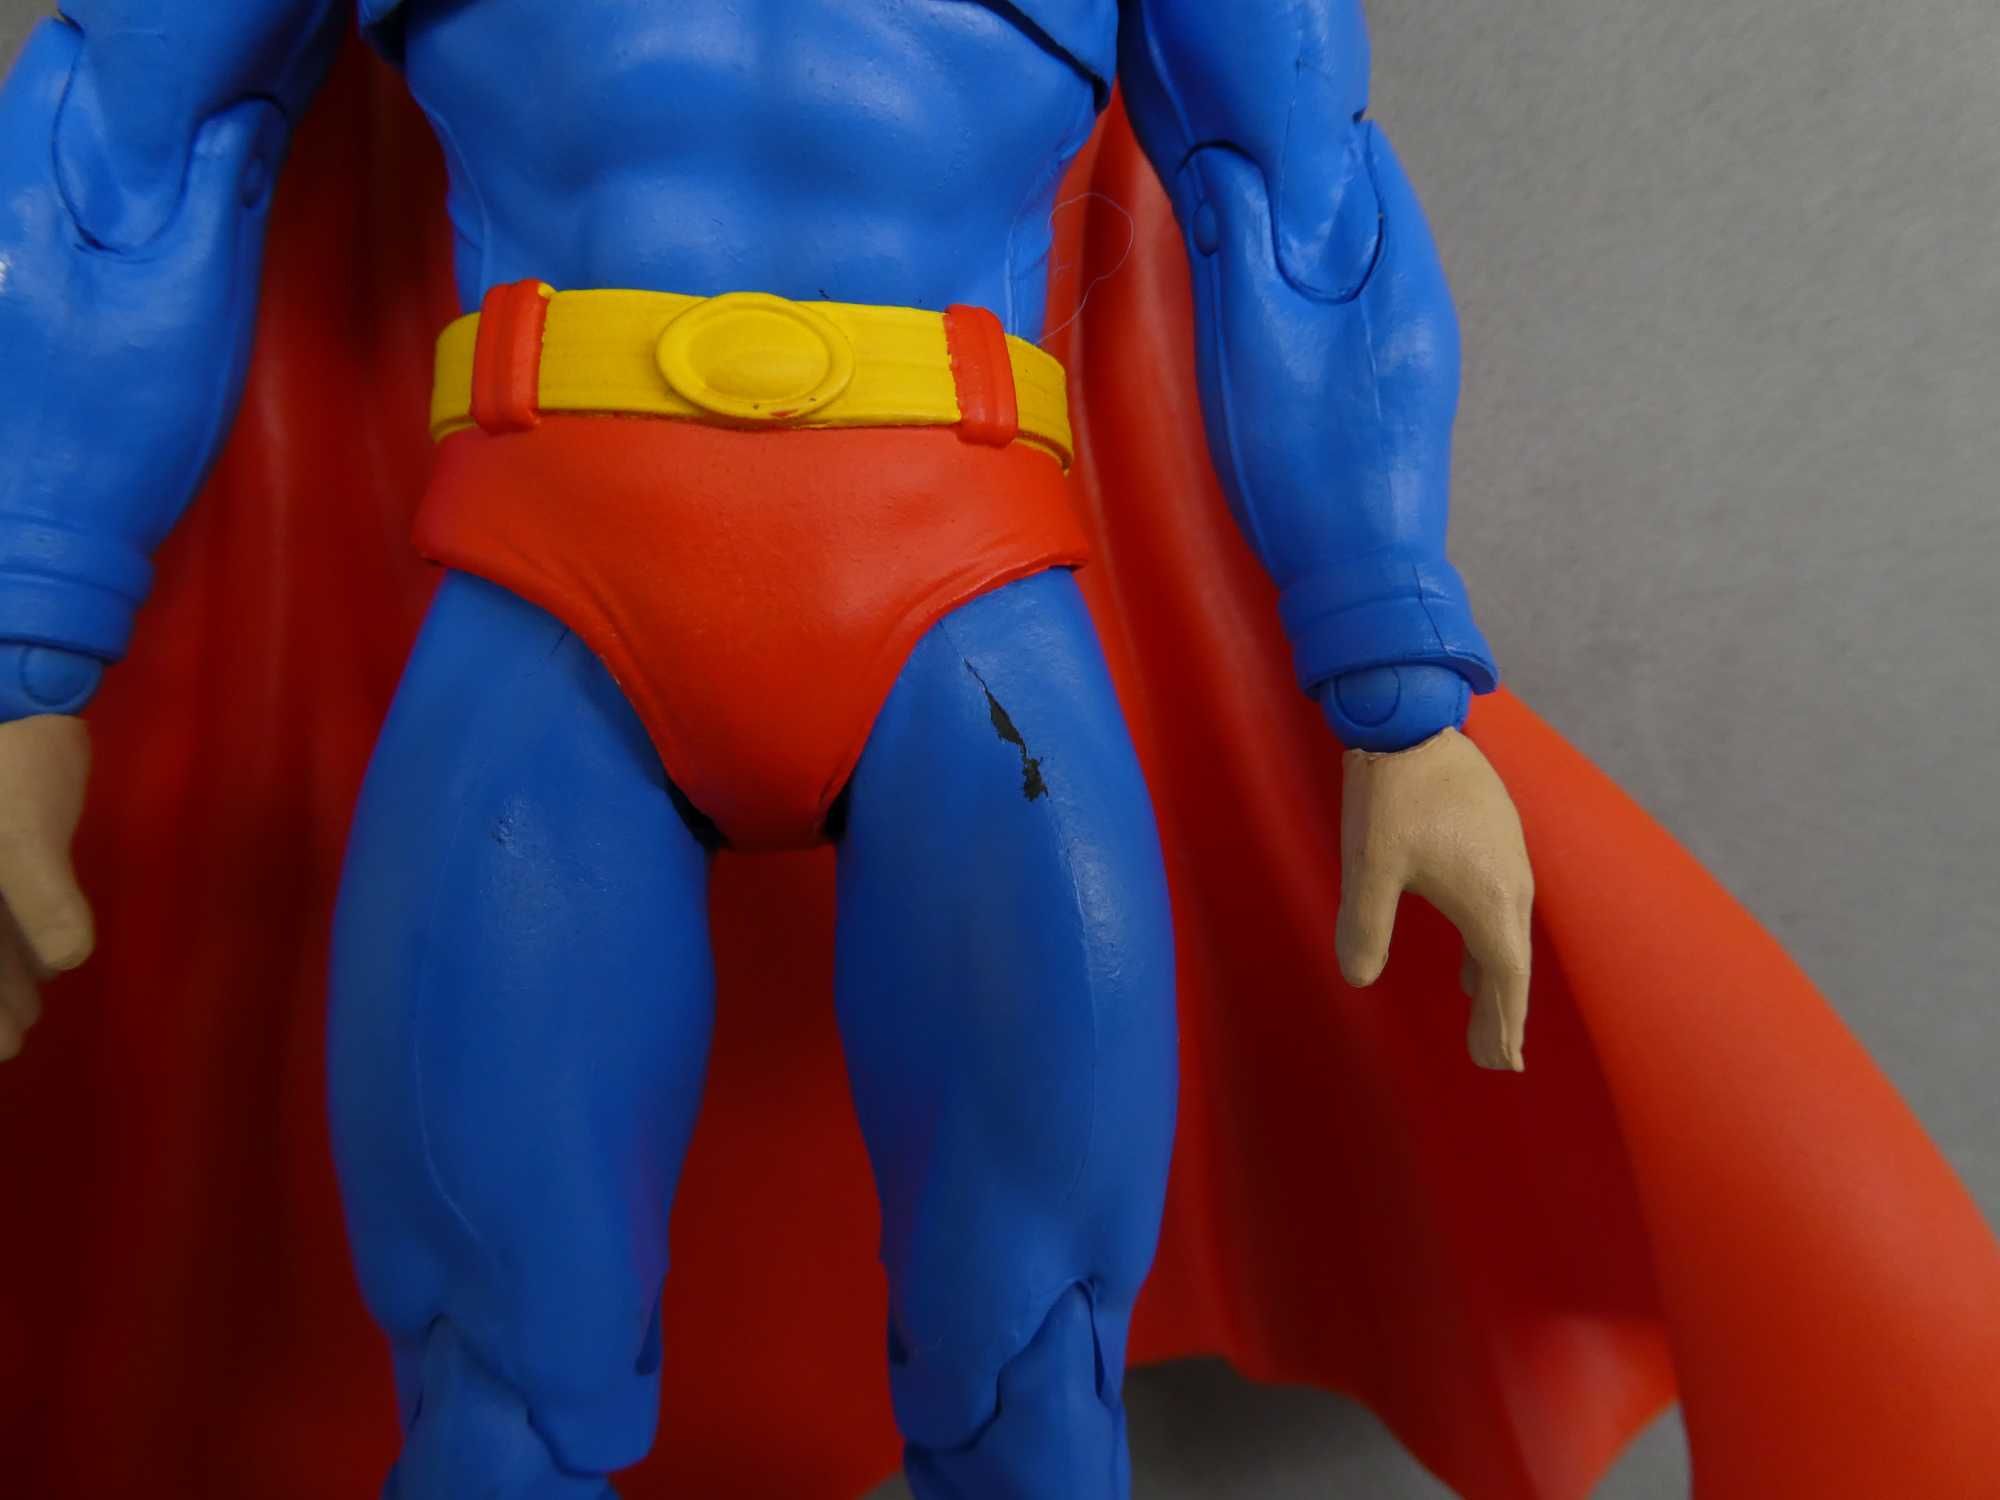 Superman DC Multiverse McFarlane